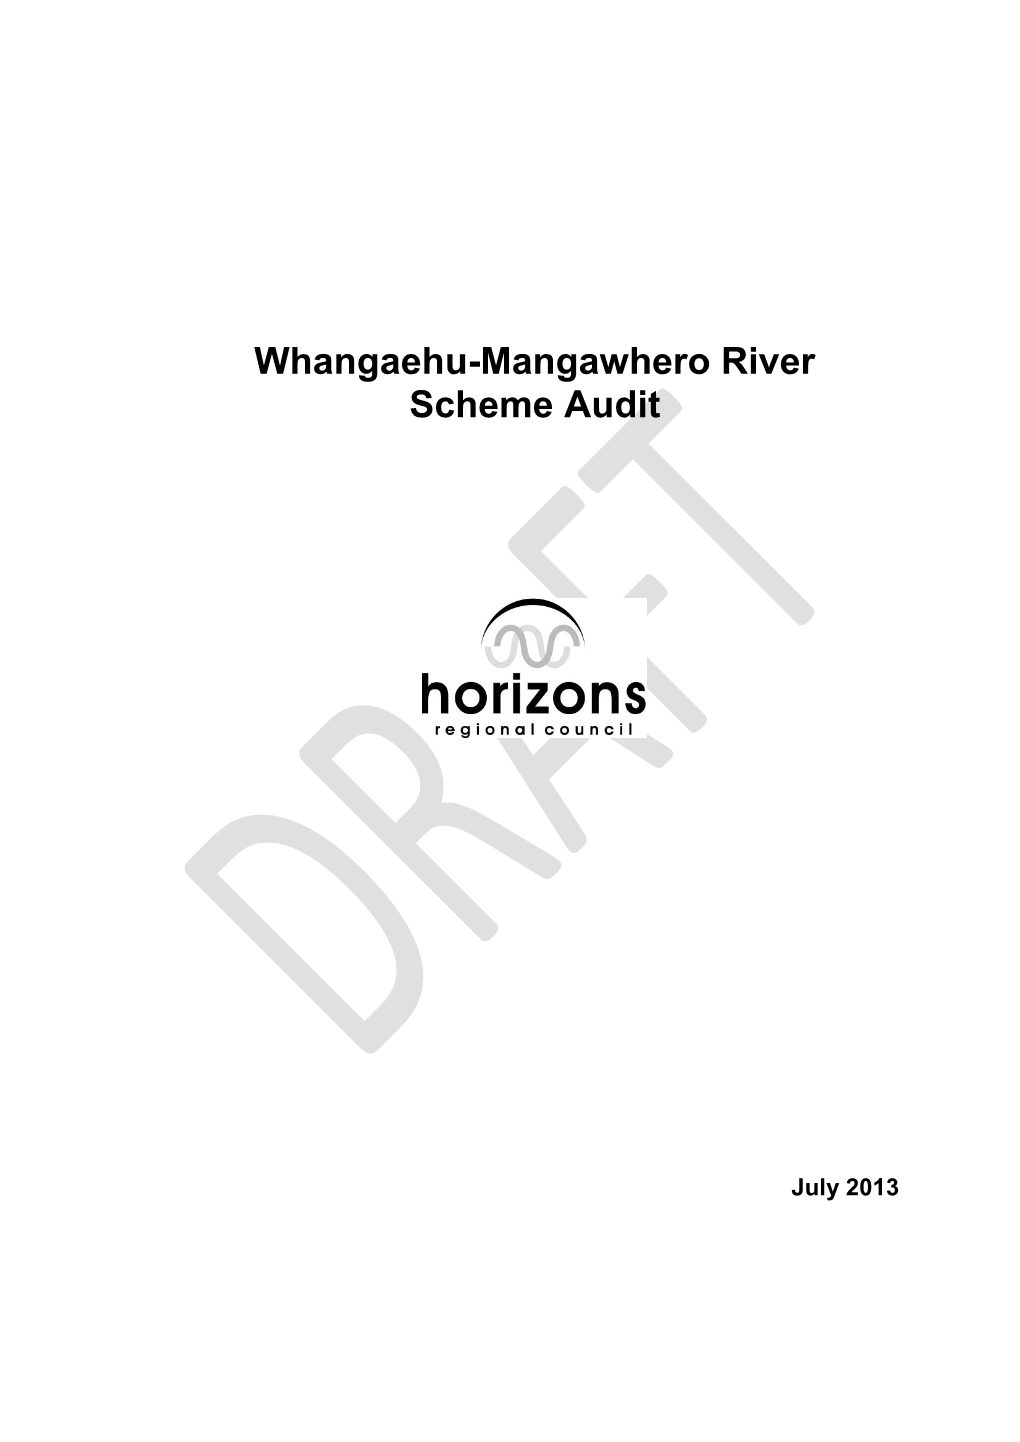 Whangaehu-Mangawhero River Scheme Audit